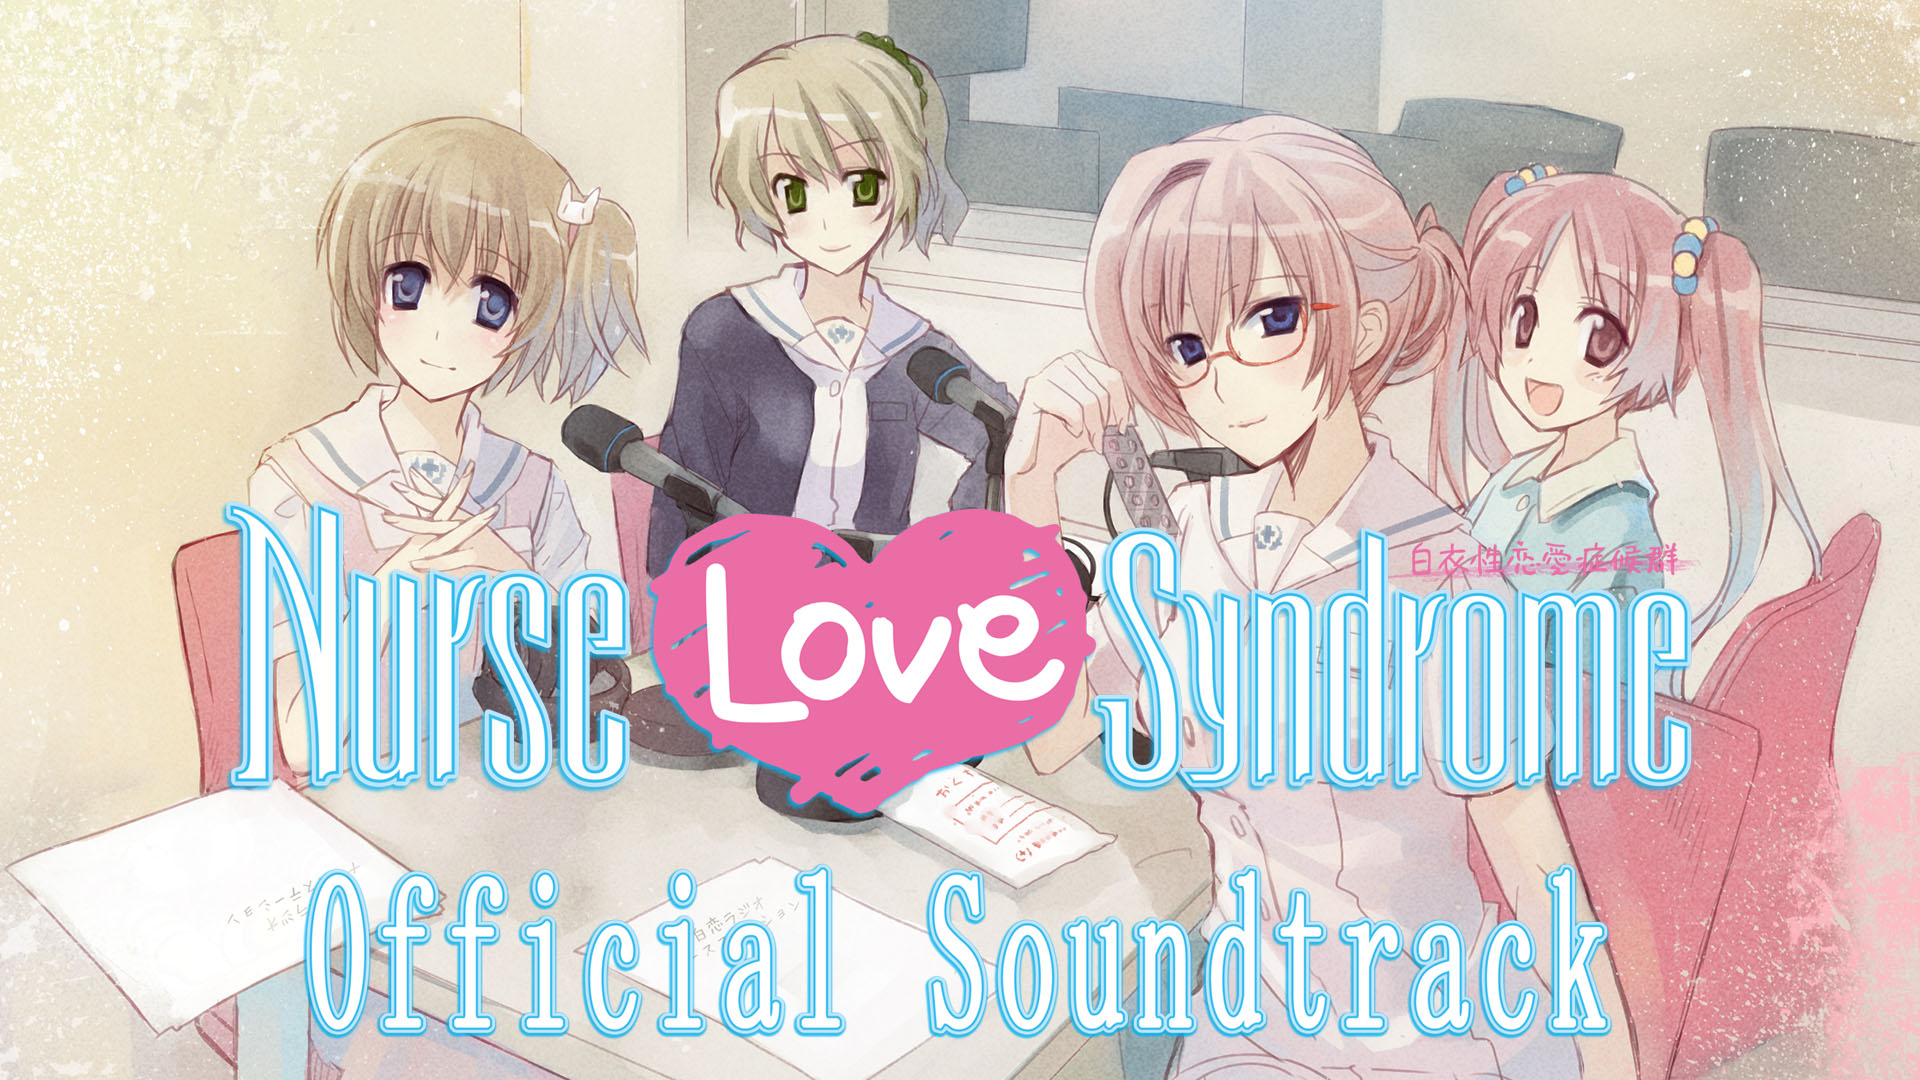 Nurse Love Syndrome - Original Soundtrack Featured Screenshot #1